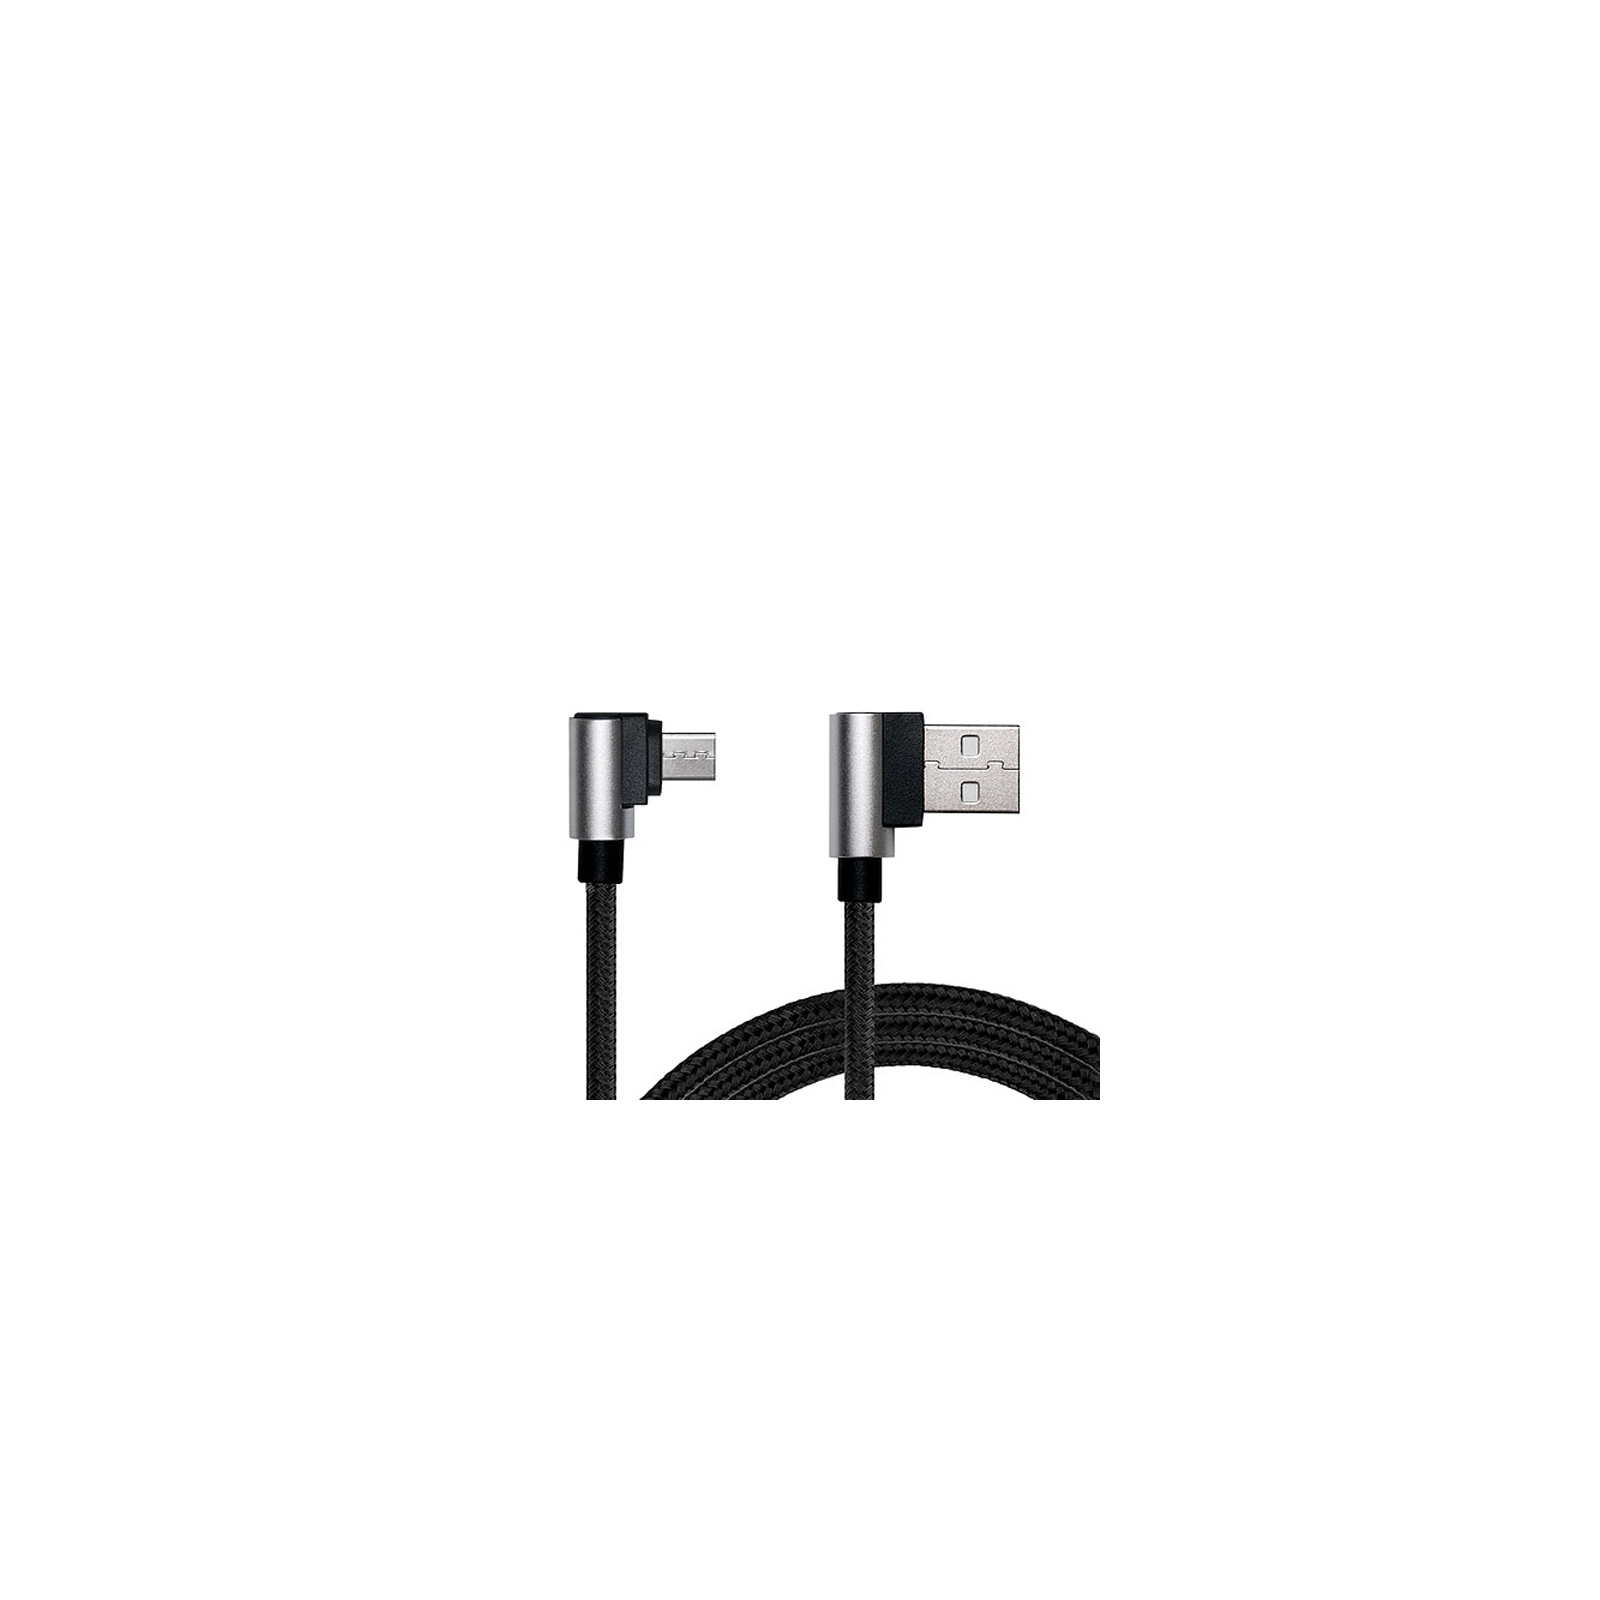 Дата кабель USB 2.0 AM to Micro 5P 1.0m Premium black REAL-EL (EL123500031) зображення 4